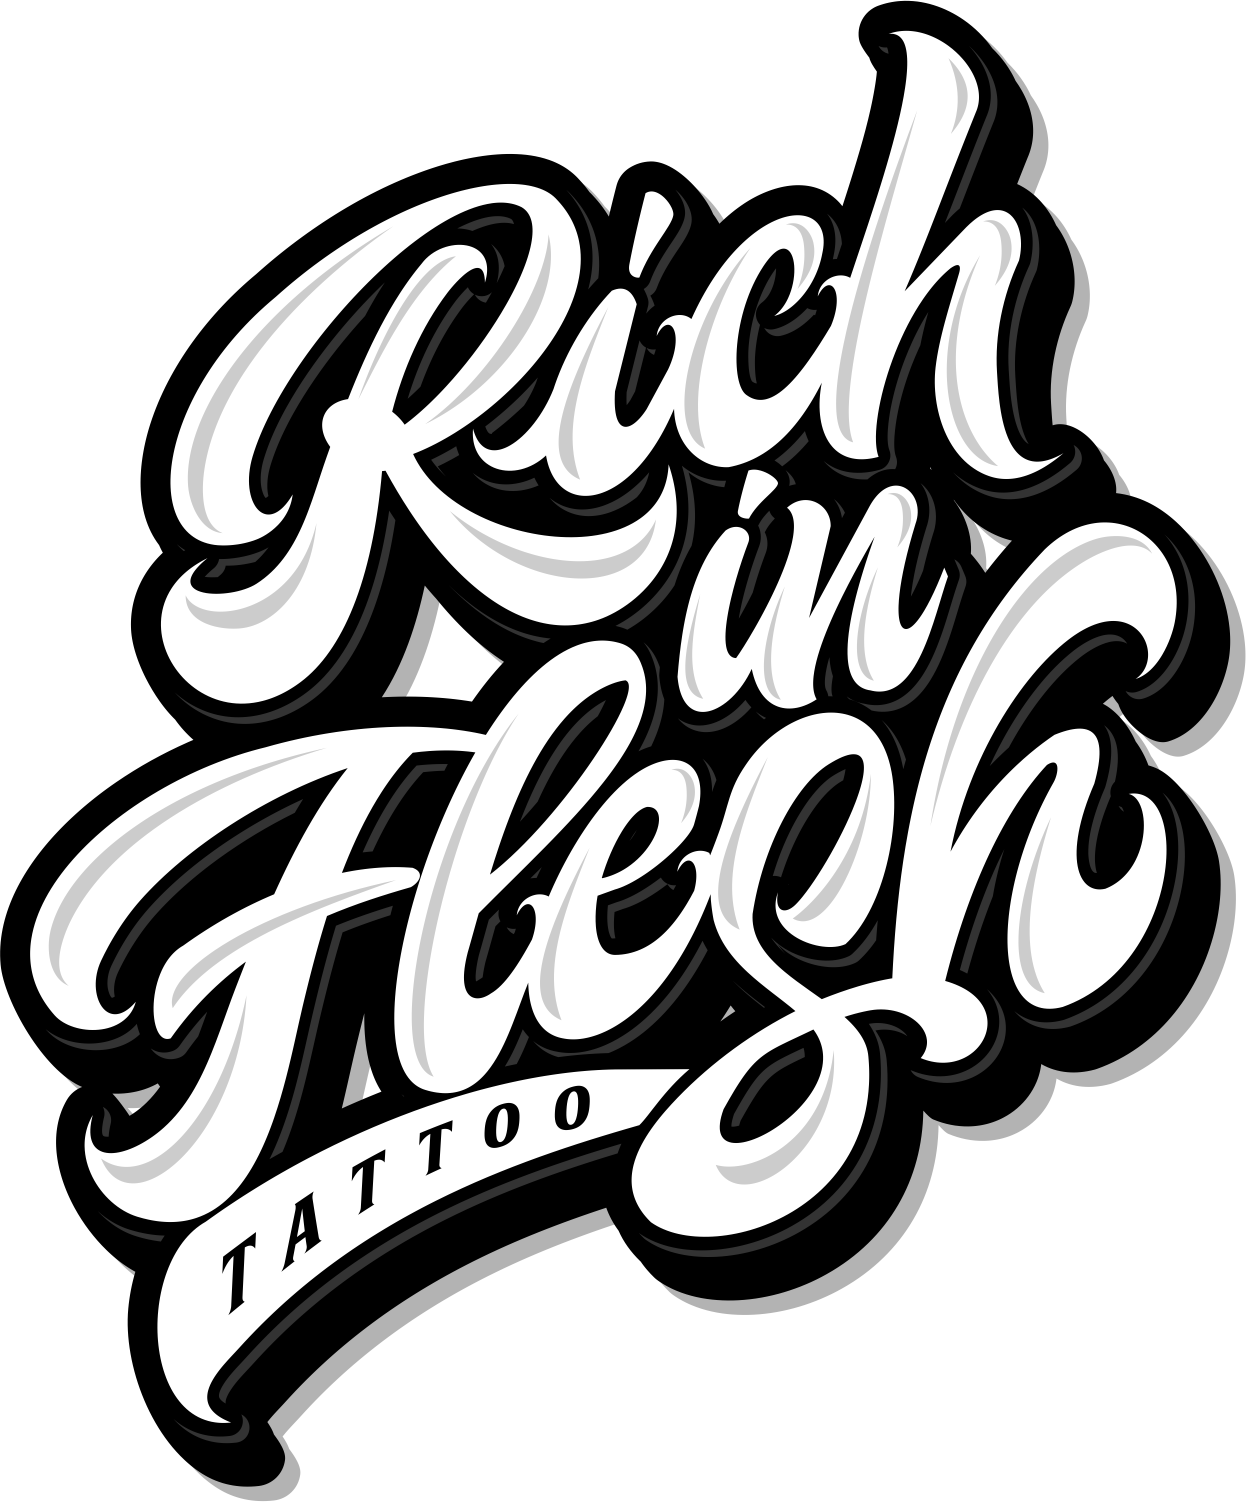 Rich in Flesh